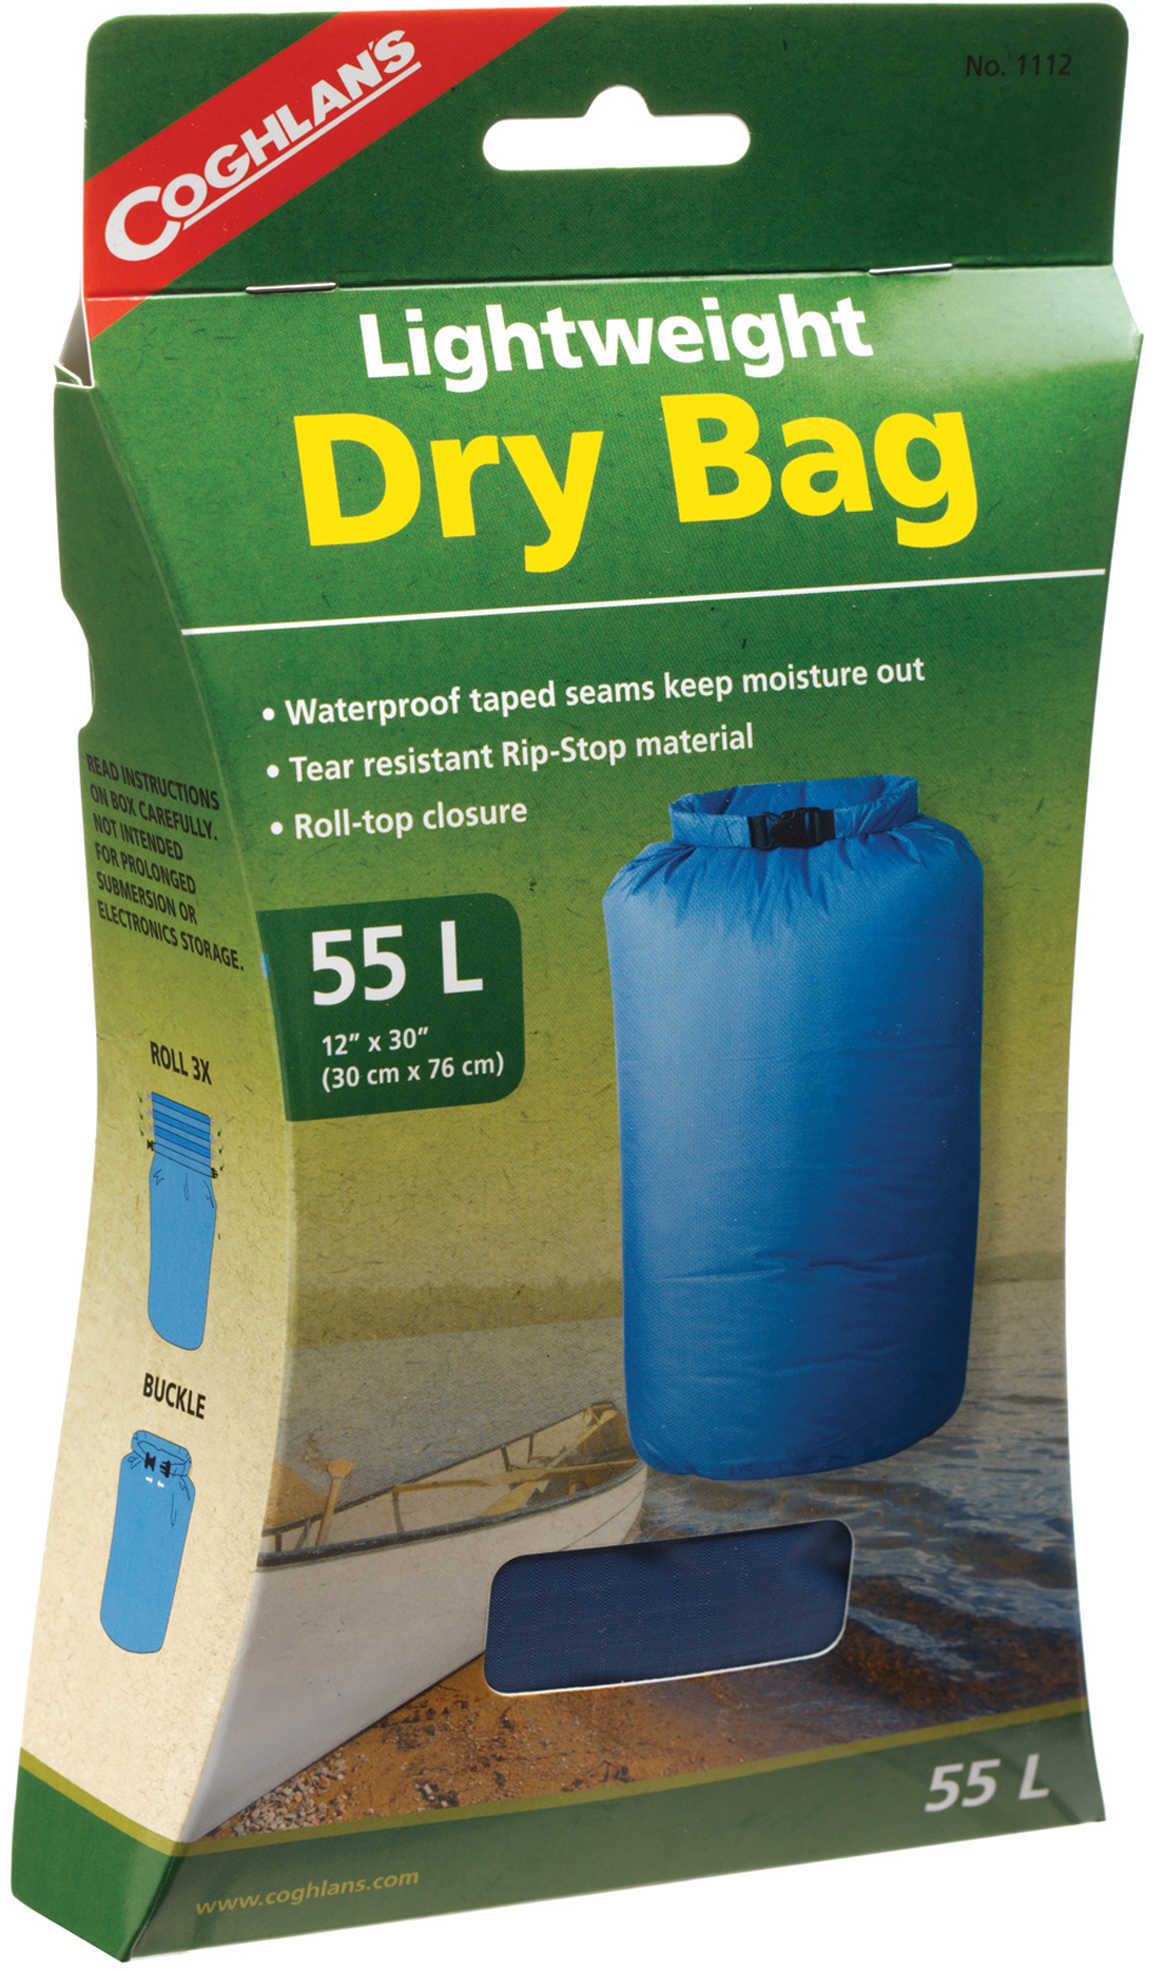 Coghlans Lightweight Dry Bag 55L 1112